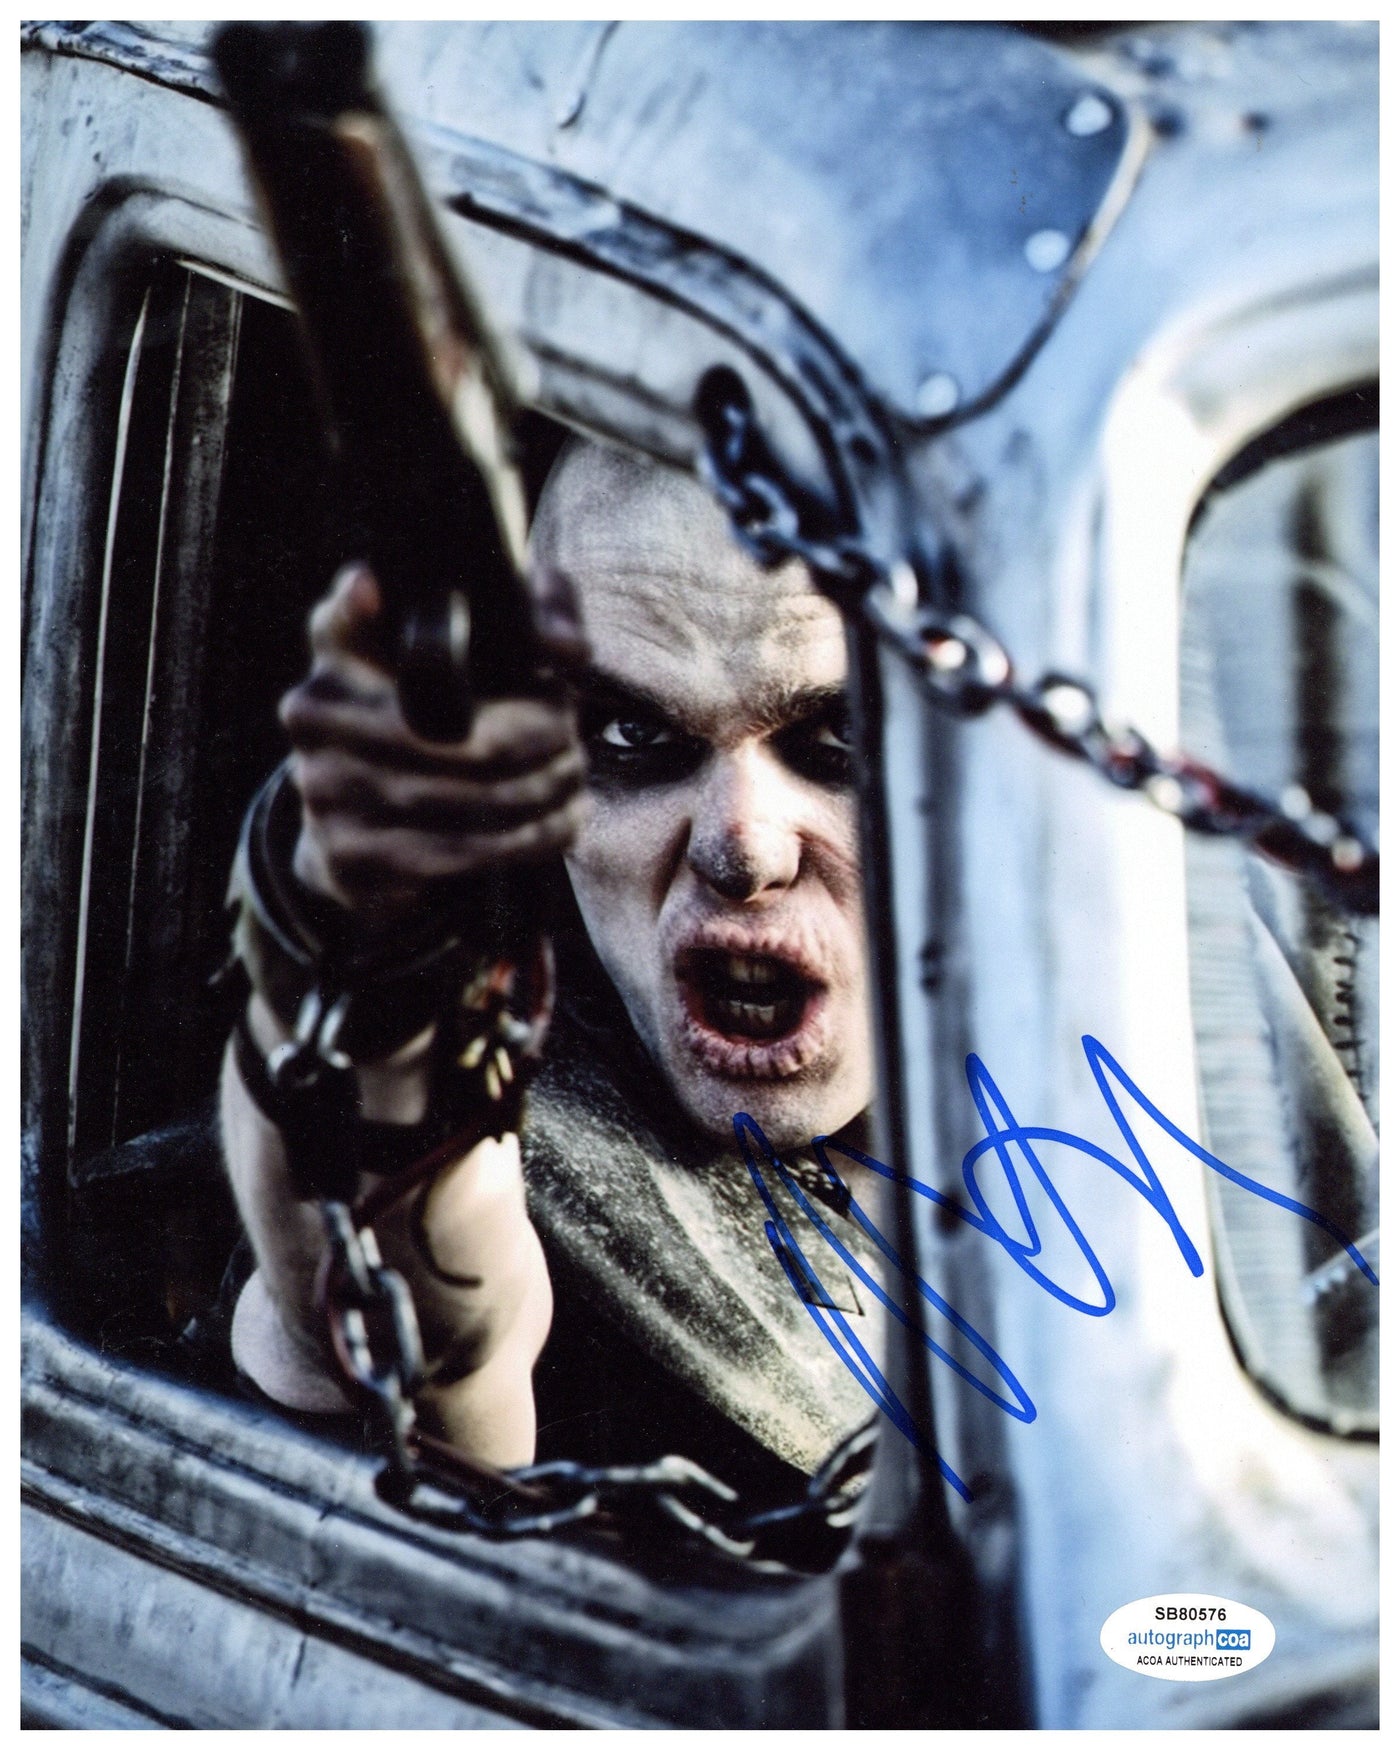 Nicholas Hoult Signed 8x10 Photo Mad Max Nux Autographed ACOA #2